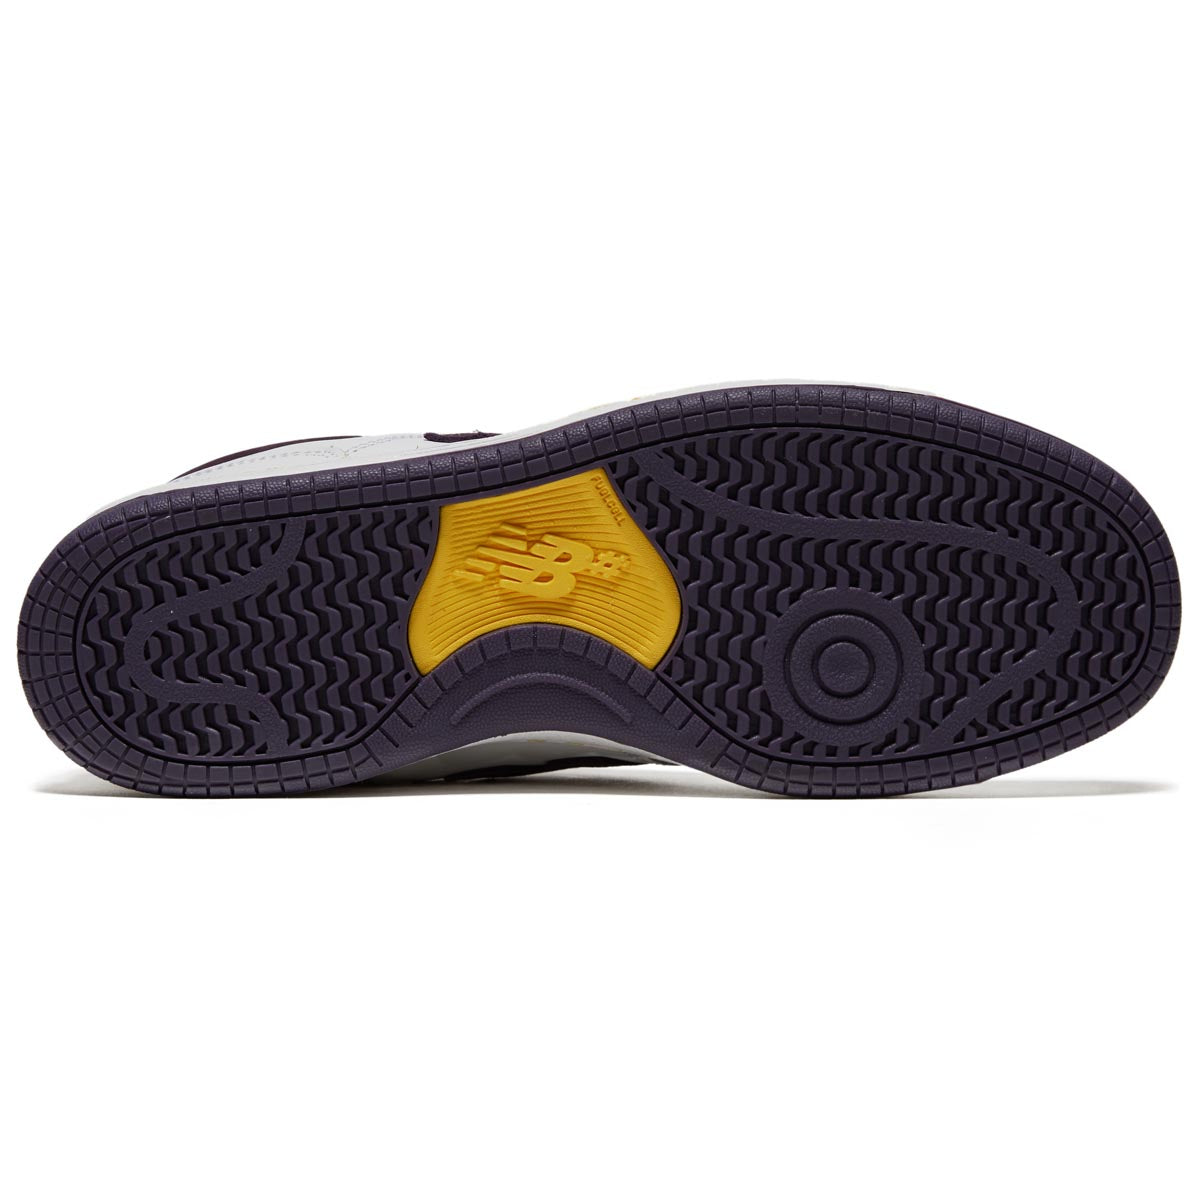 New Balance 480 Shoes - White/Purple/Gold image 4